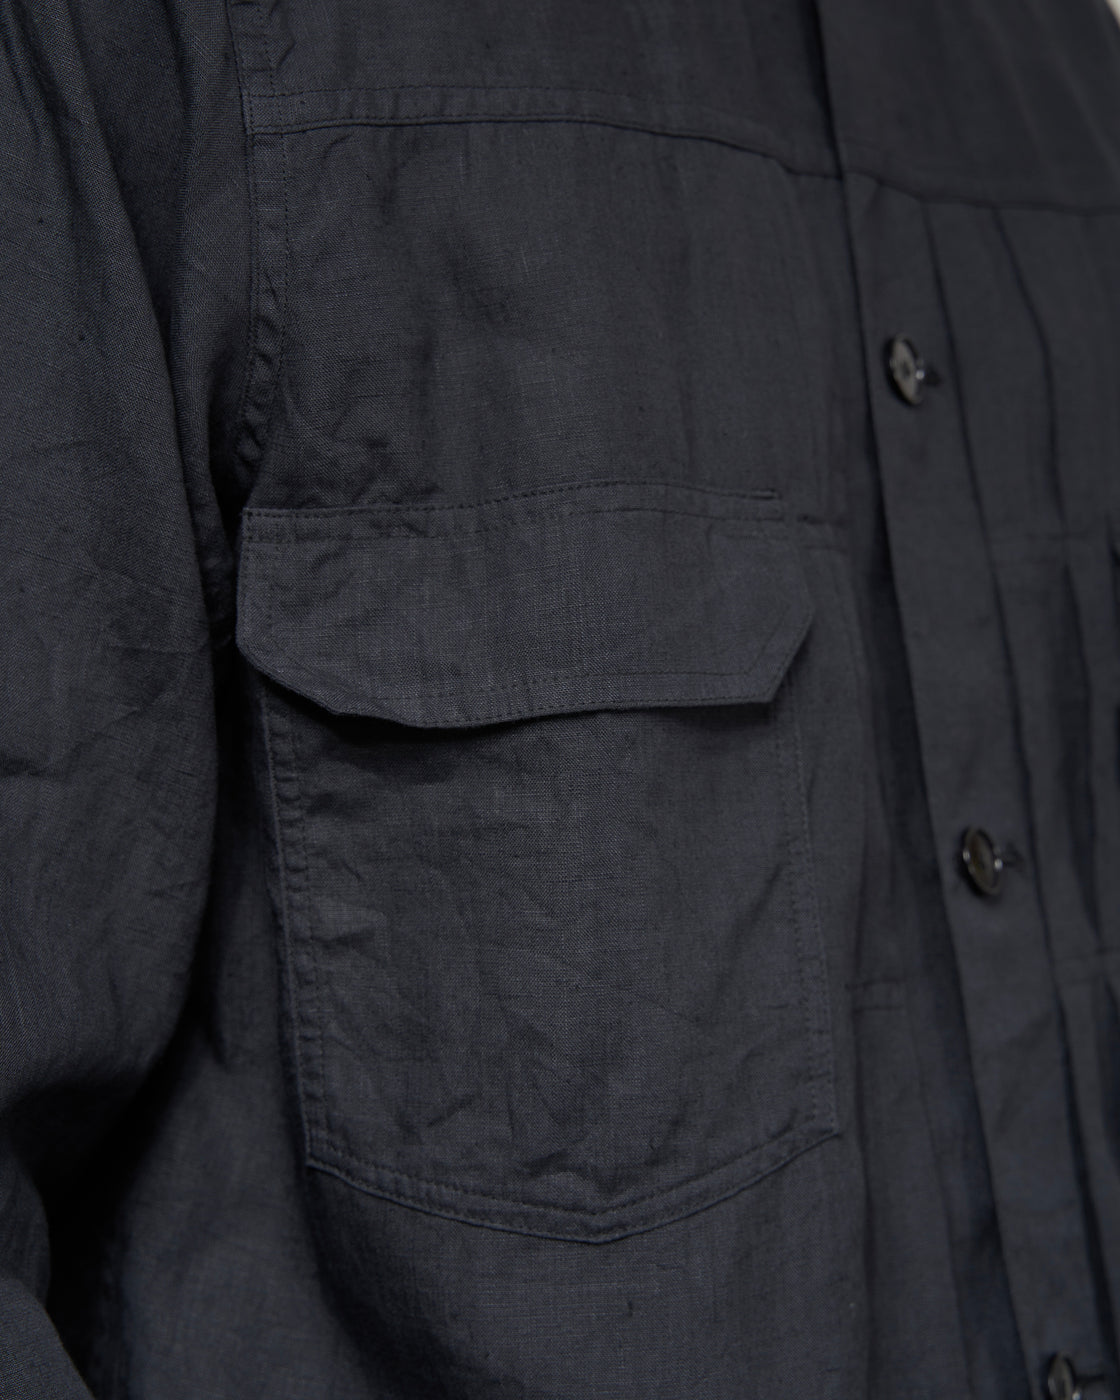 S H LVND-004 Trucker Shirt(Linen Garment Dye), Ink Black